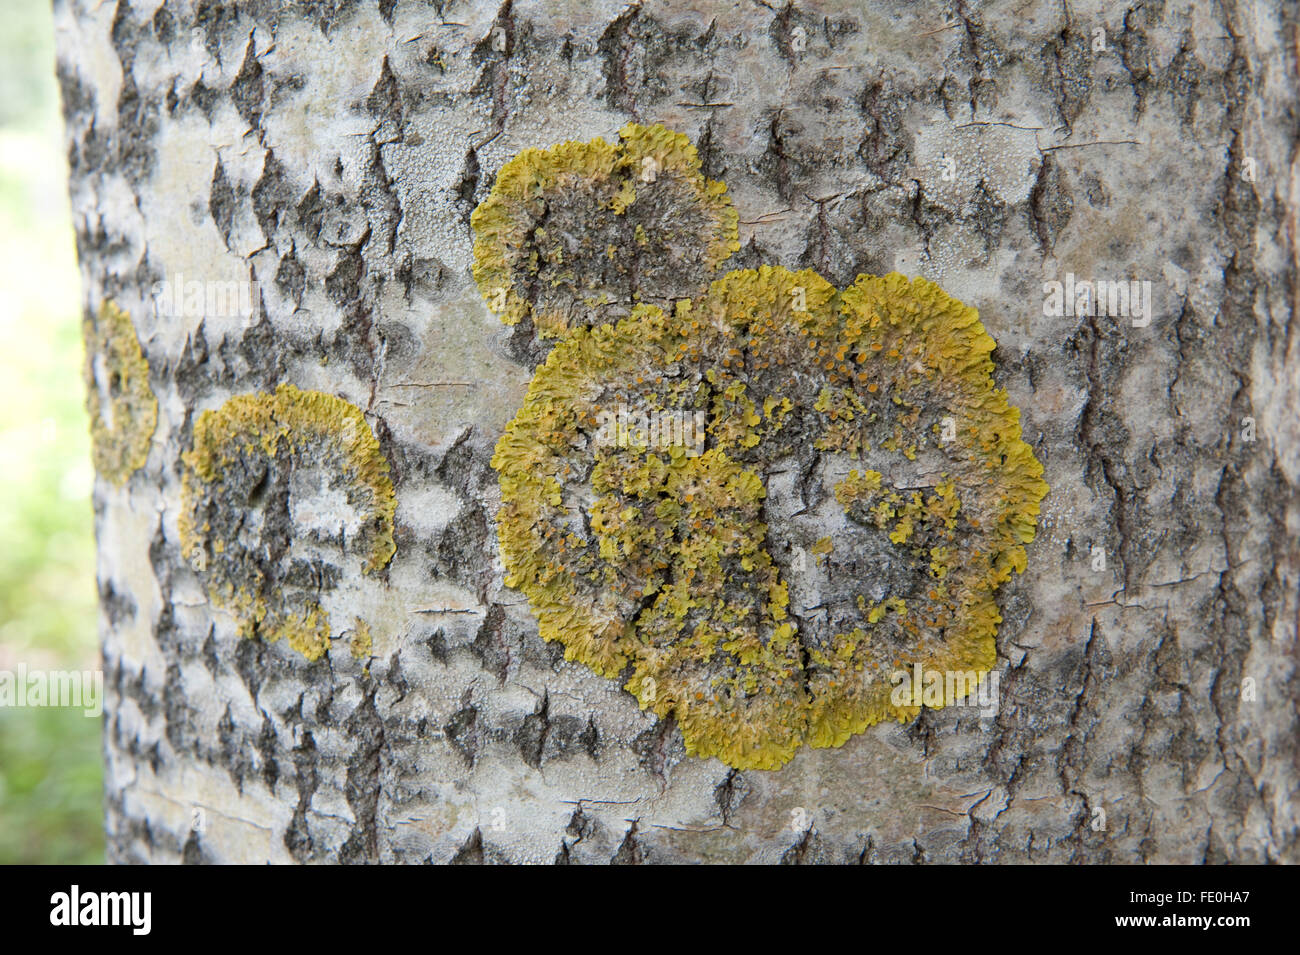 Lichen on Silver Birch Tree Trunk, Finland Stock Photo